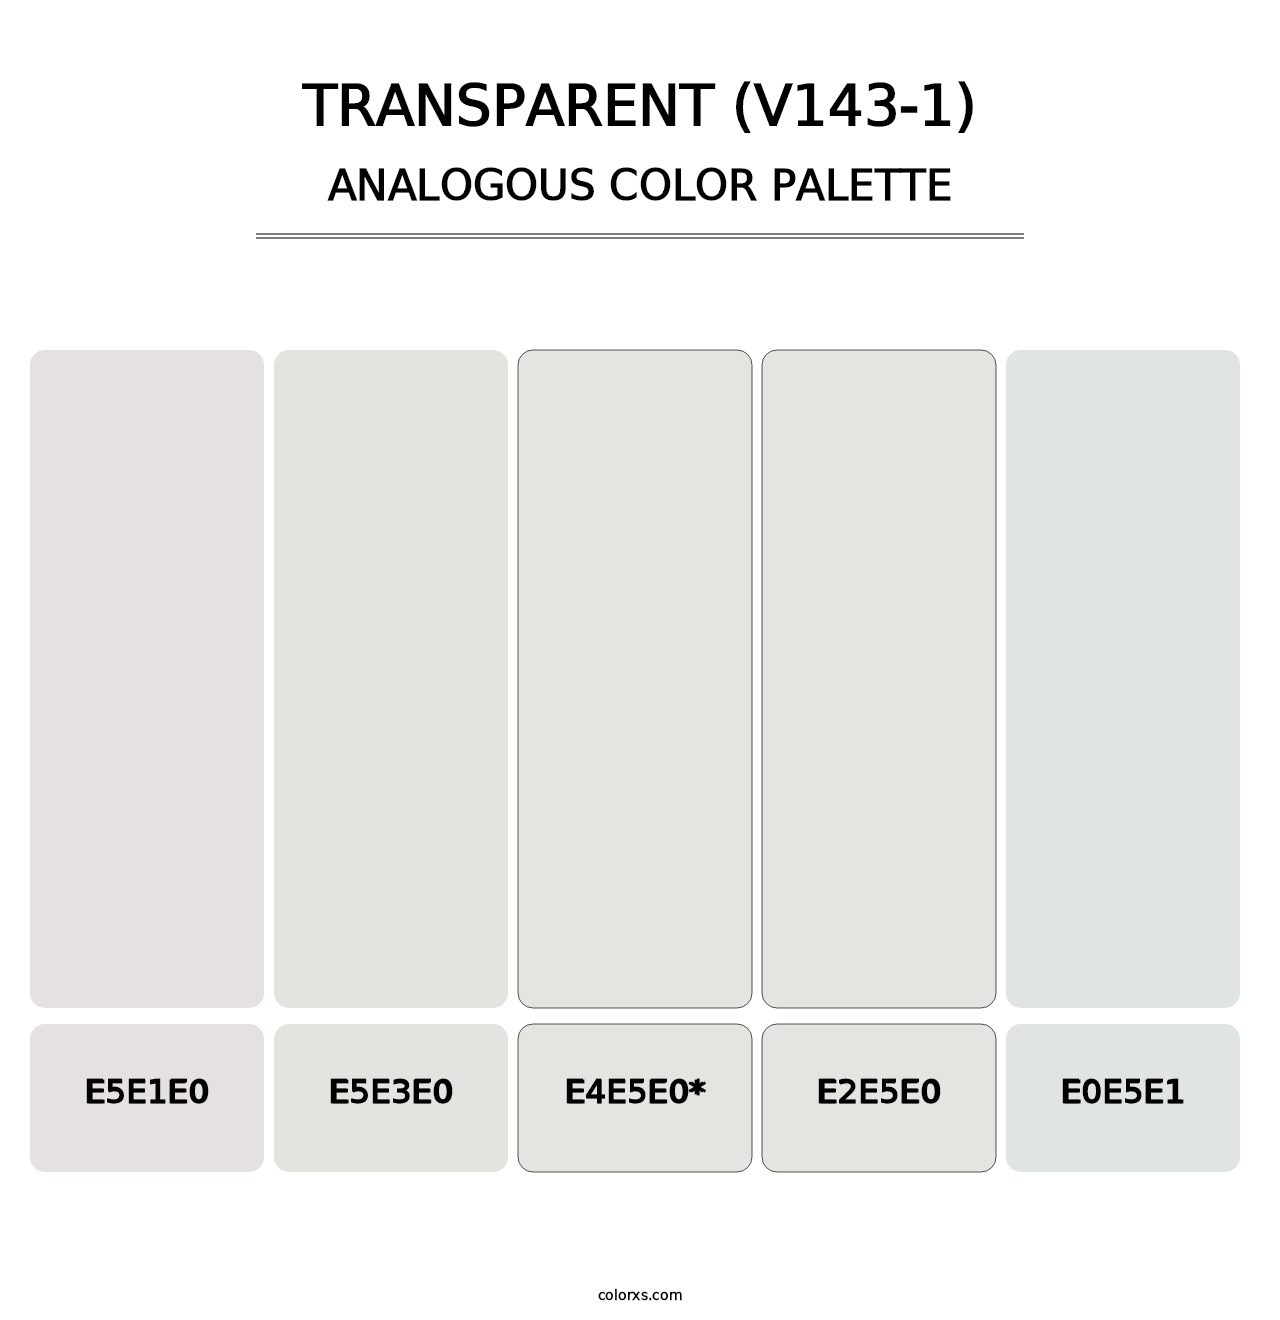 Transparent (V143-1) - Analogous Color Palette